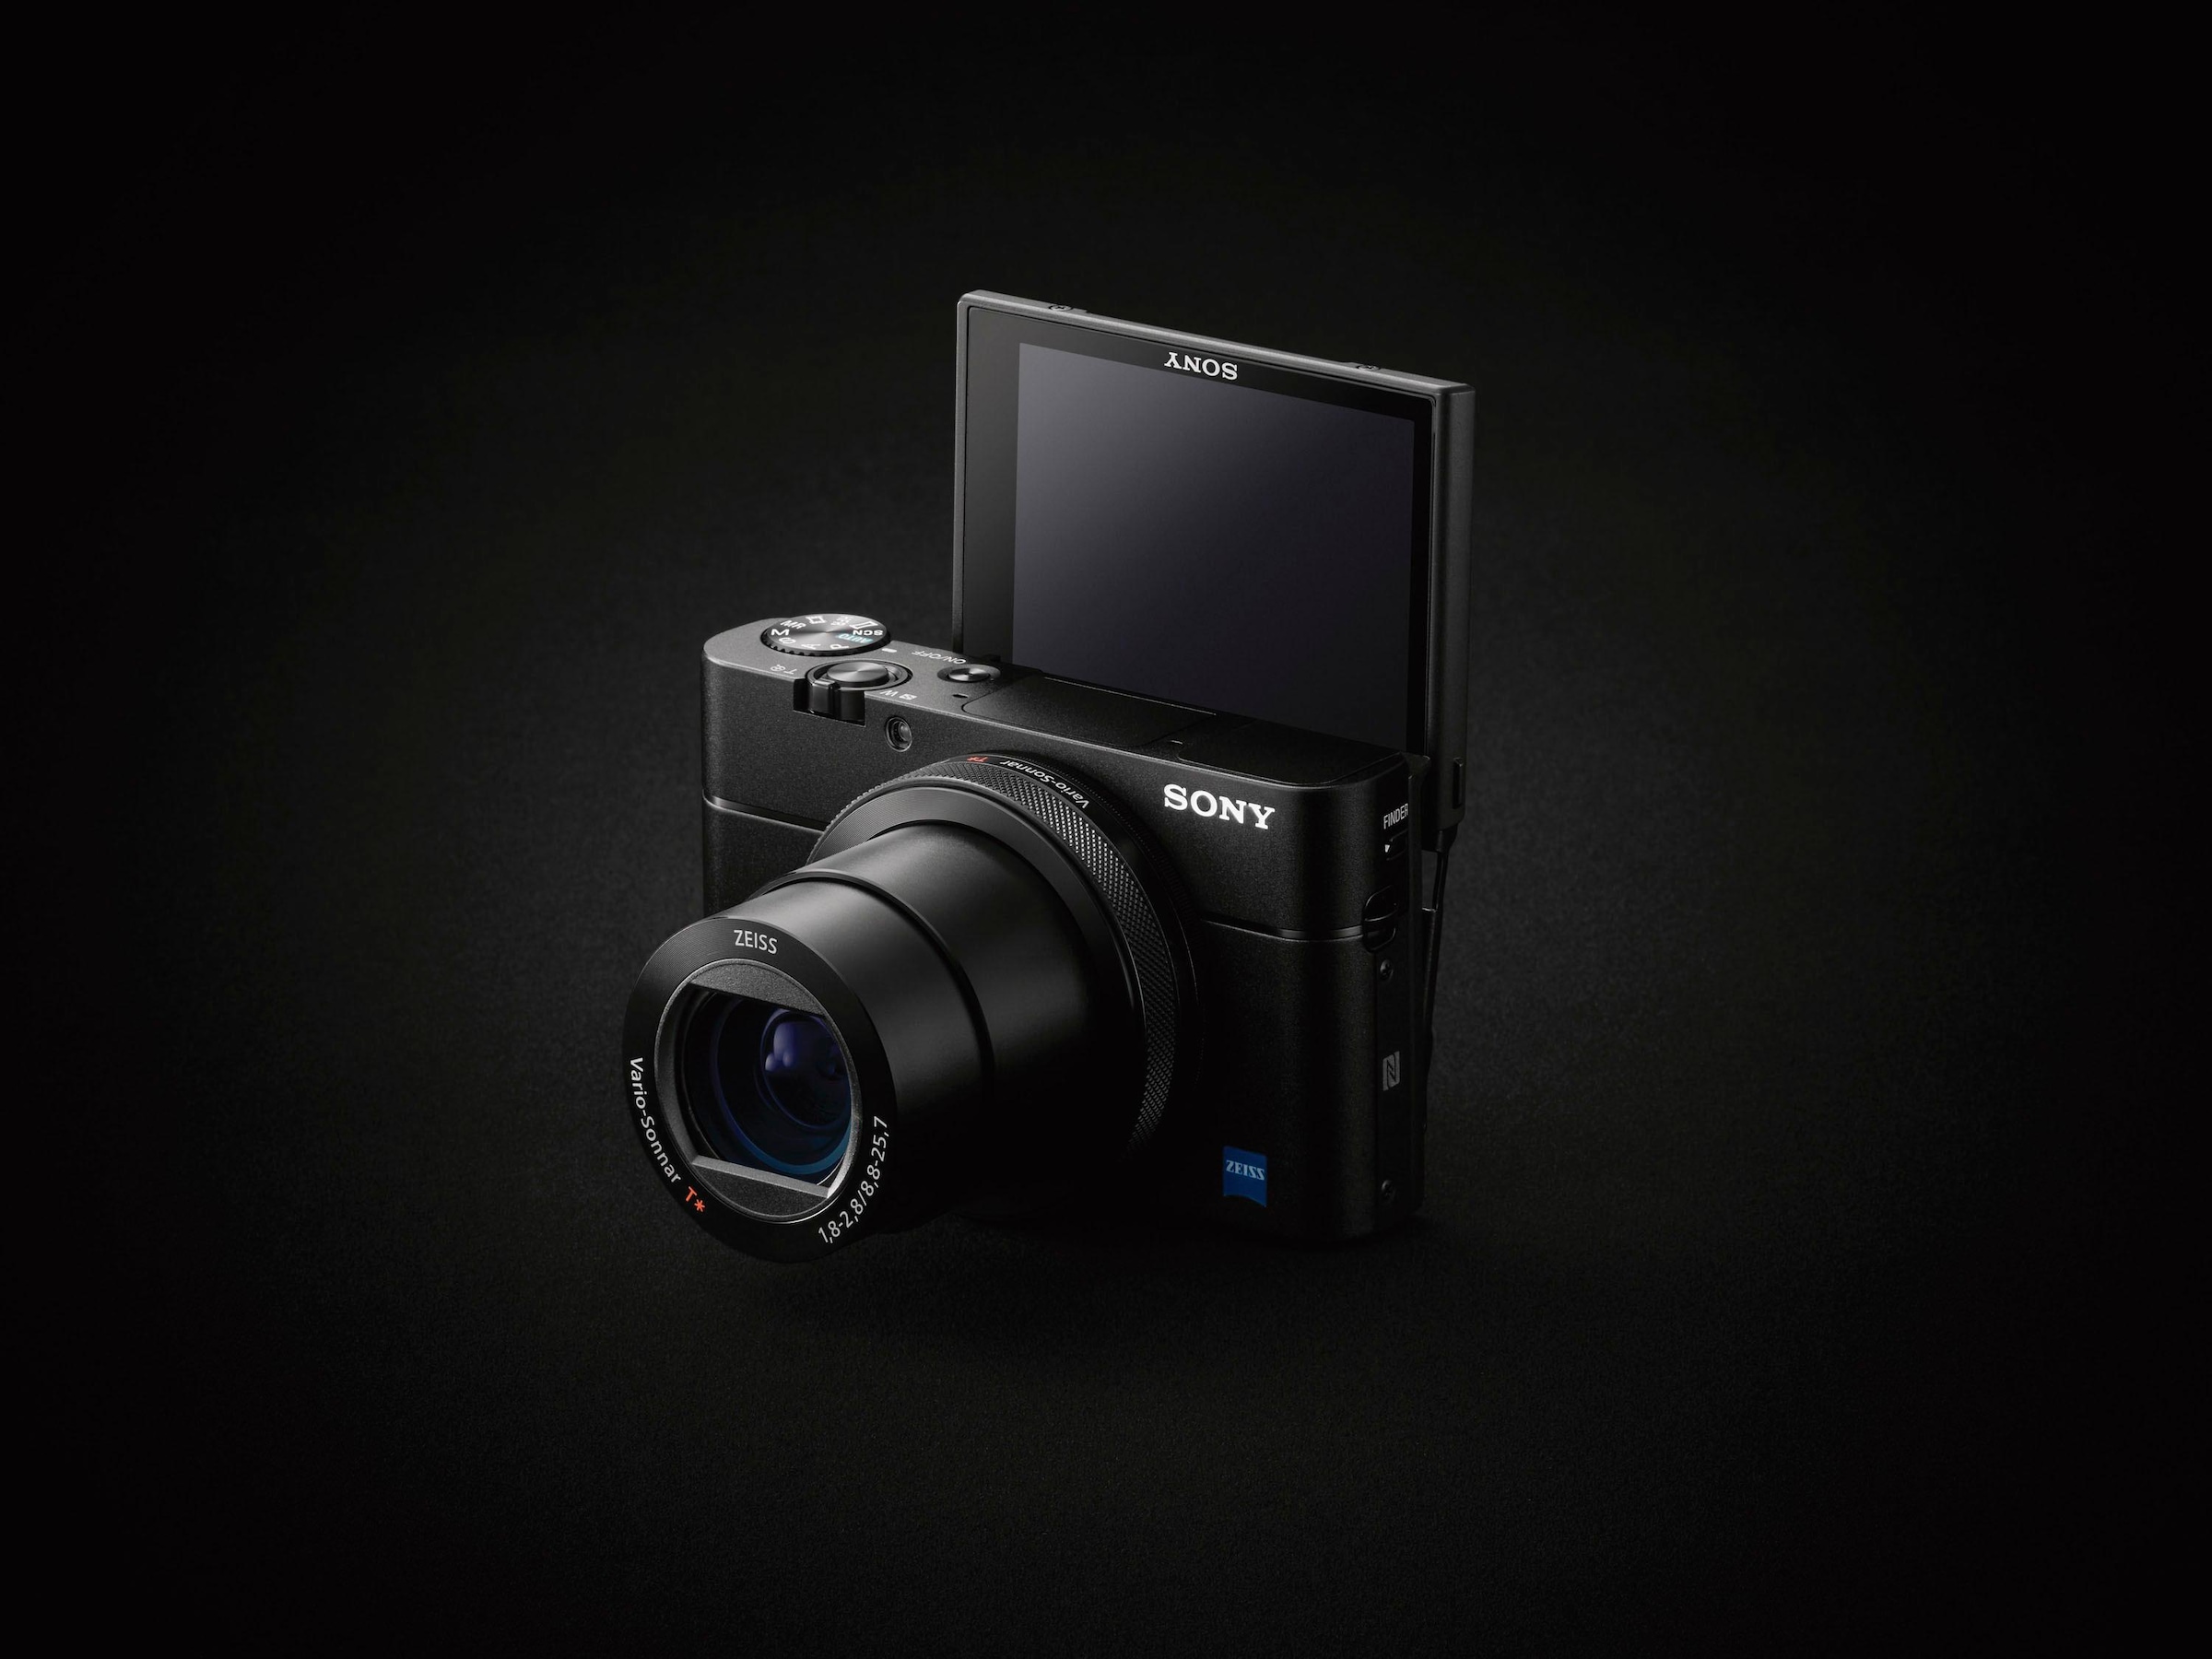 Sony Kompaktkamera »DSC-RX100 VA«, Carl Zeiss Vario Sonnar T*, 20,1 MP, NFC-WLAN (Wi-Fi)